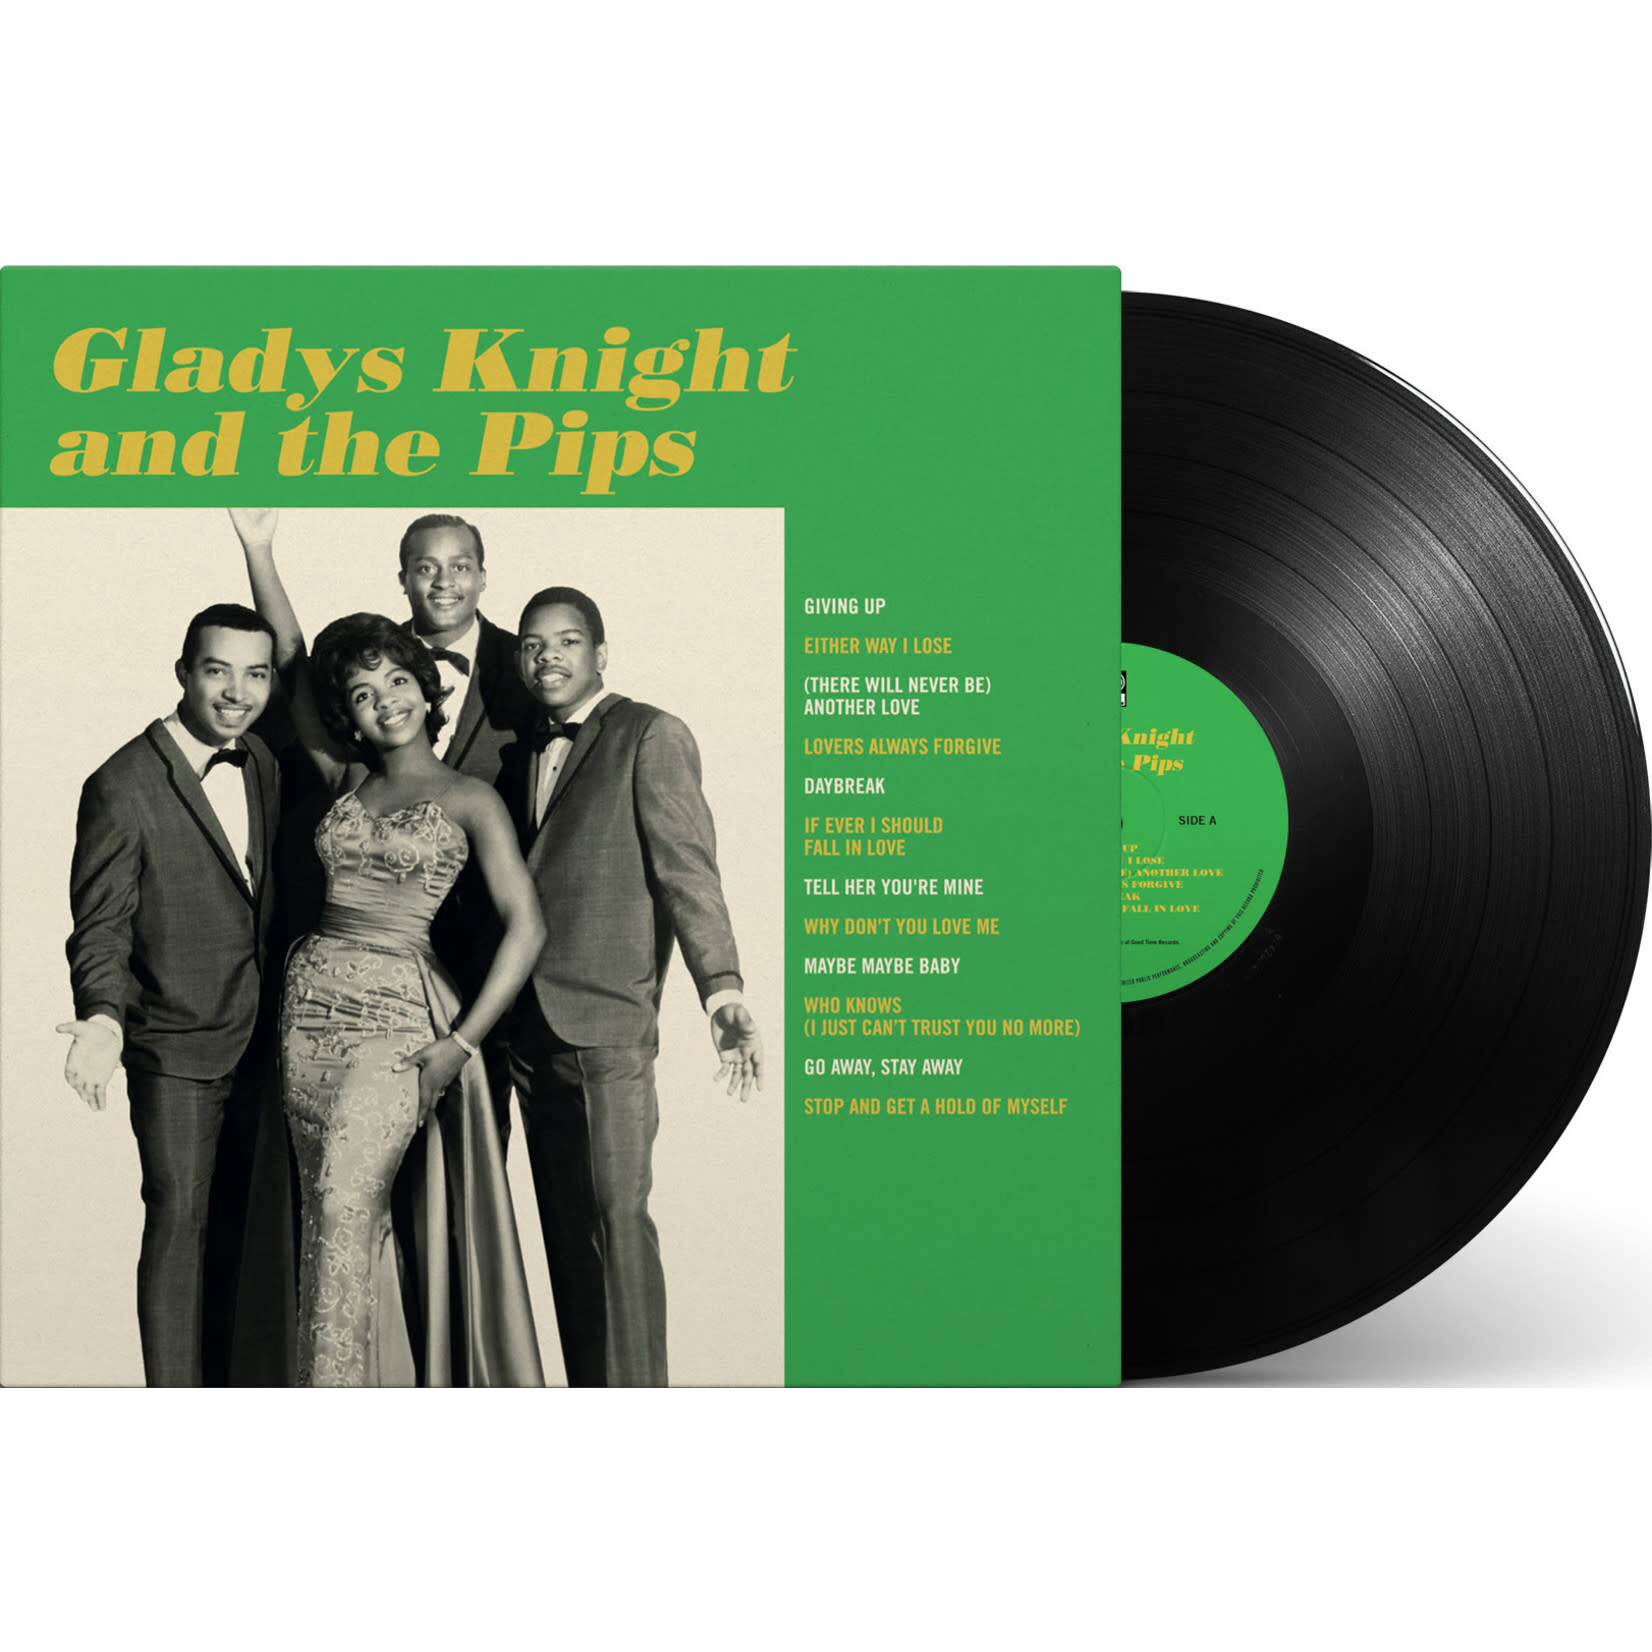 Gladys Knight & The Pips - Gladys Knight & The Pips [LP] (RSDBF2022)